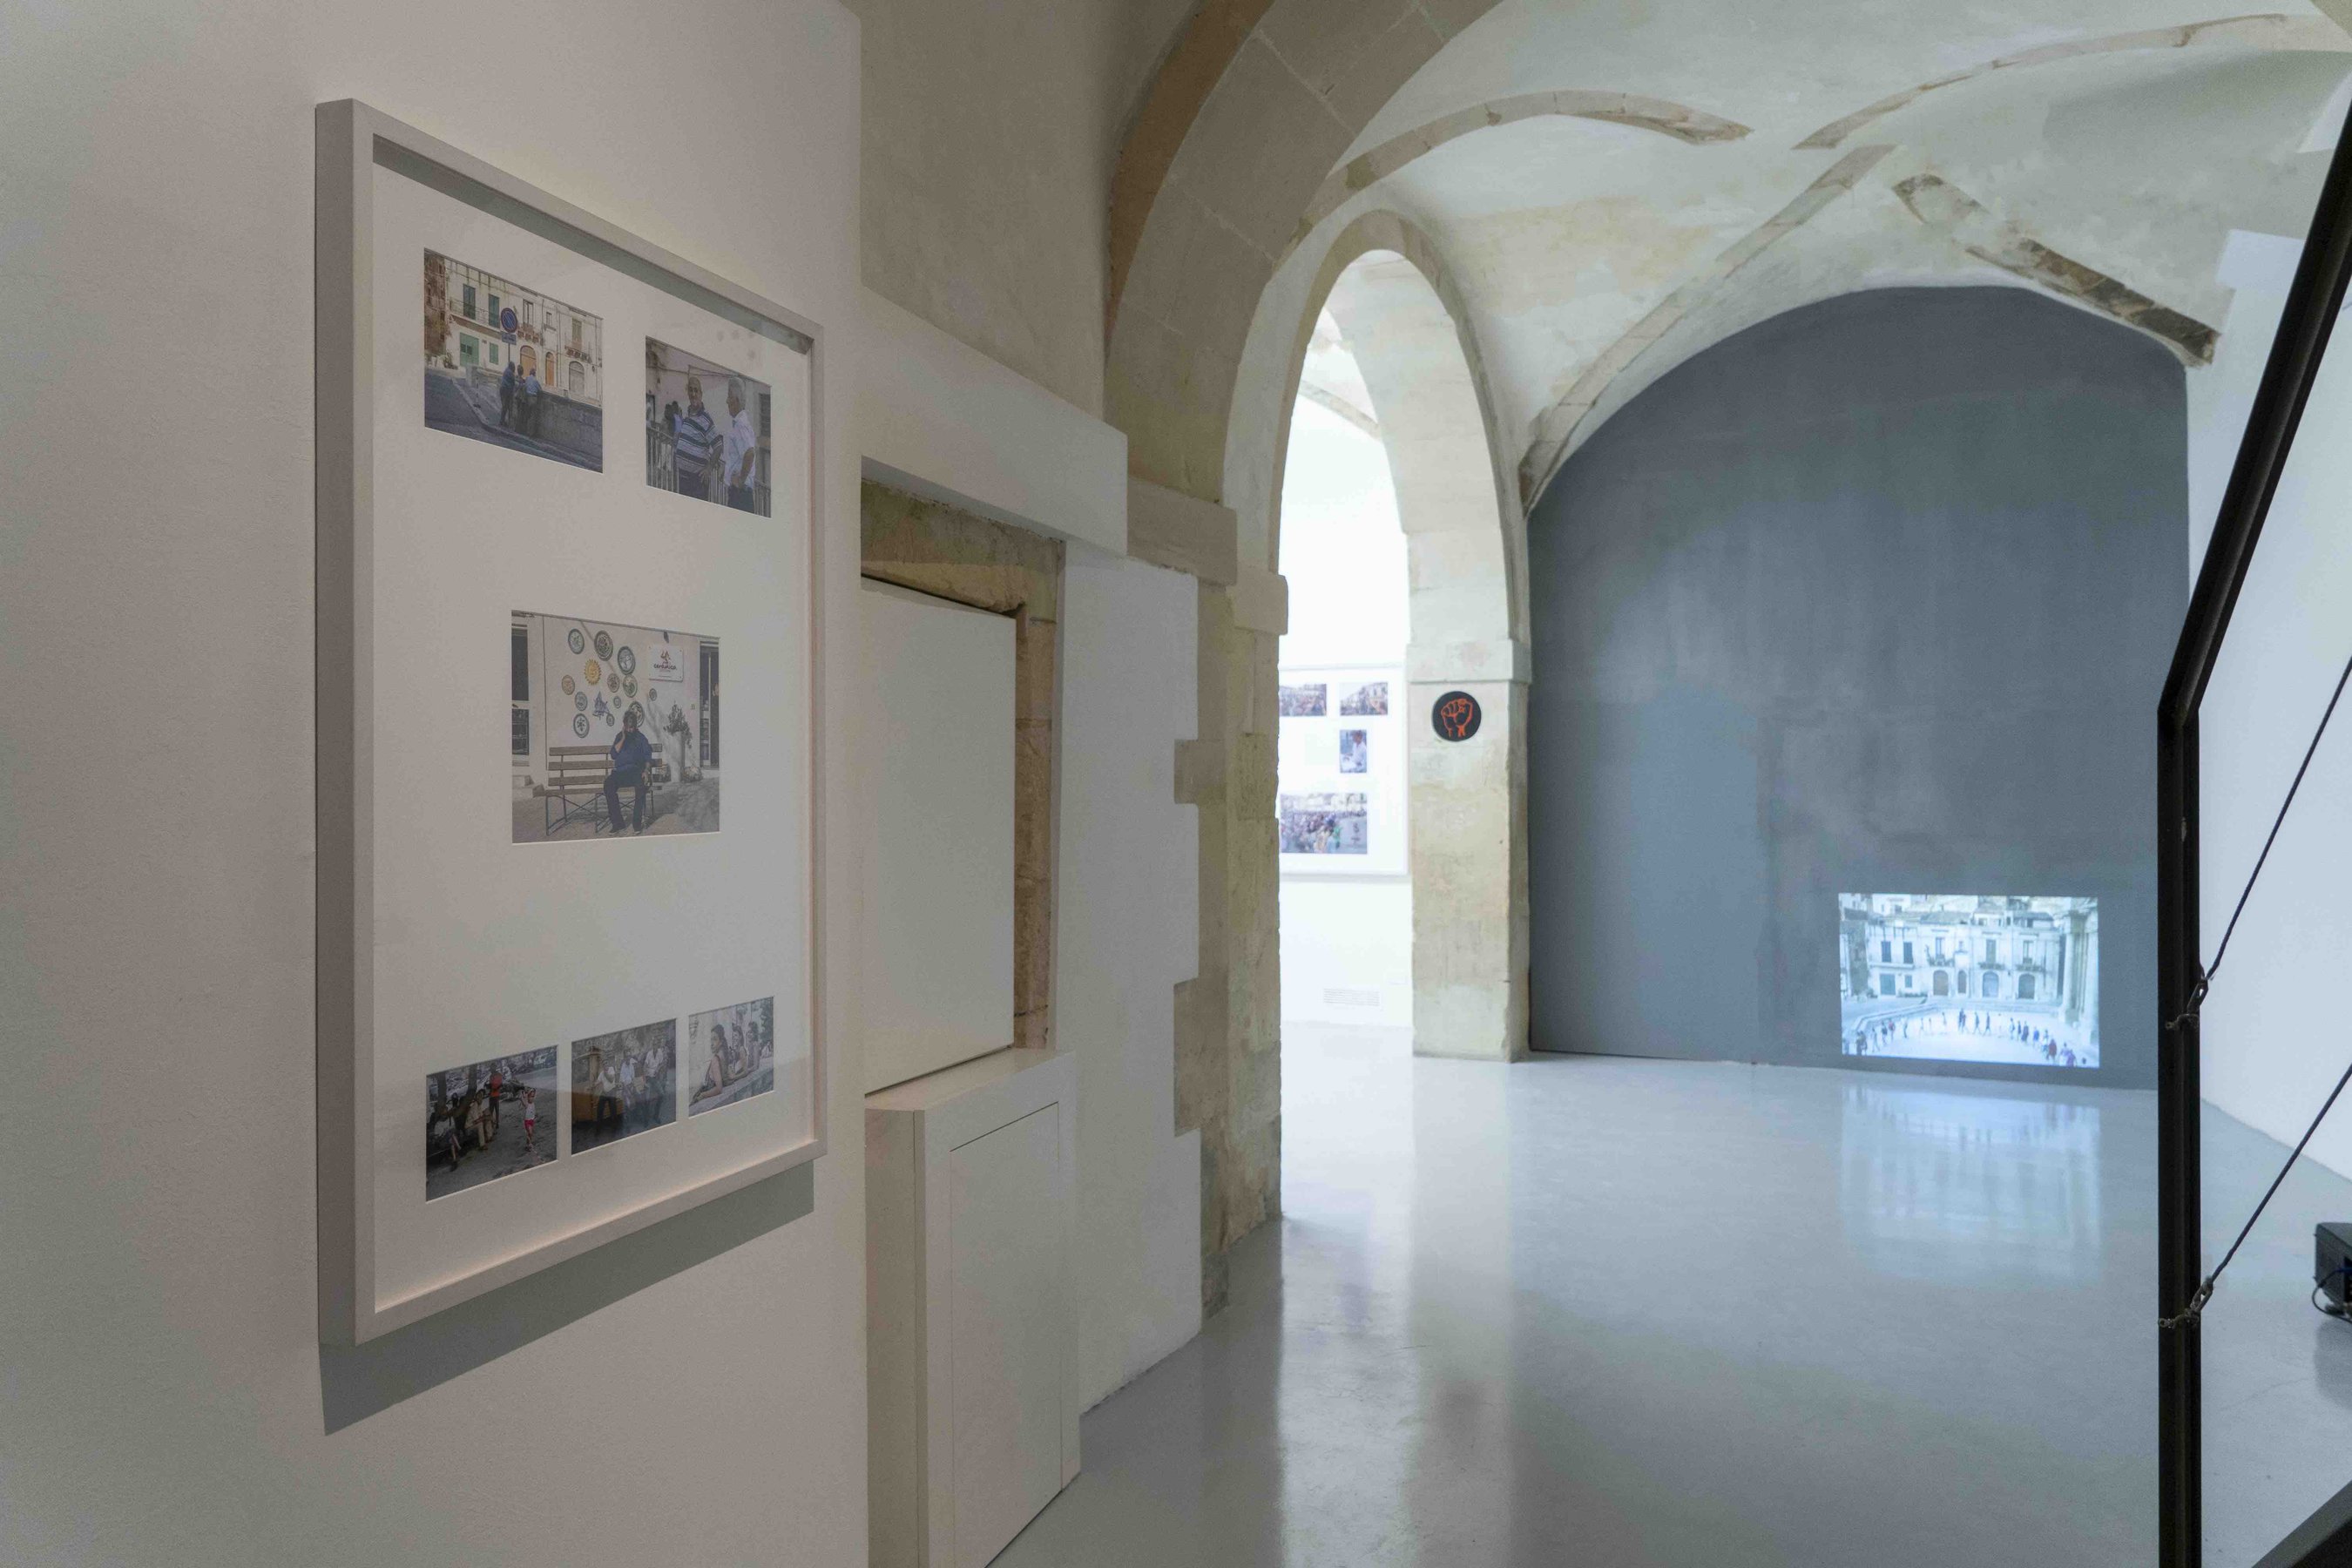 Adrian Paci, The Encounter, installation view at laveronica arte contemporanea